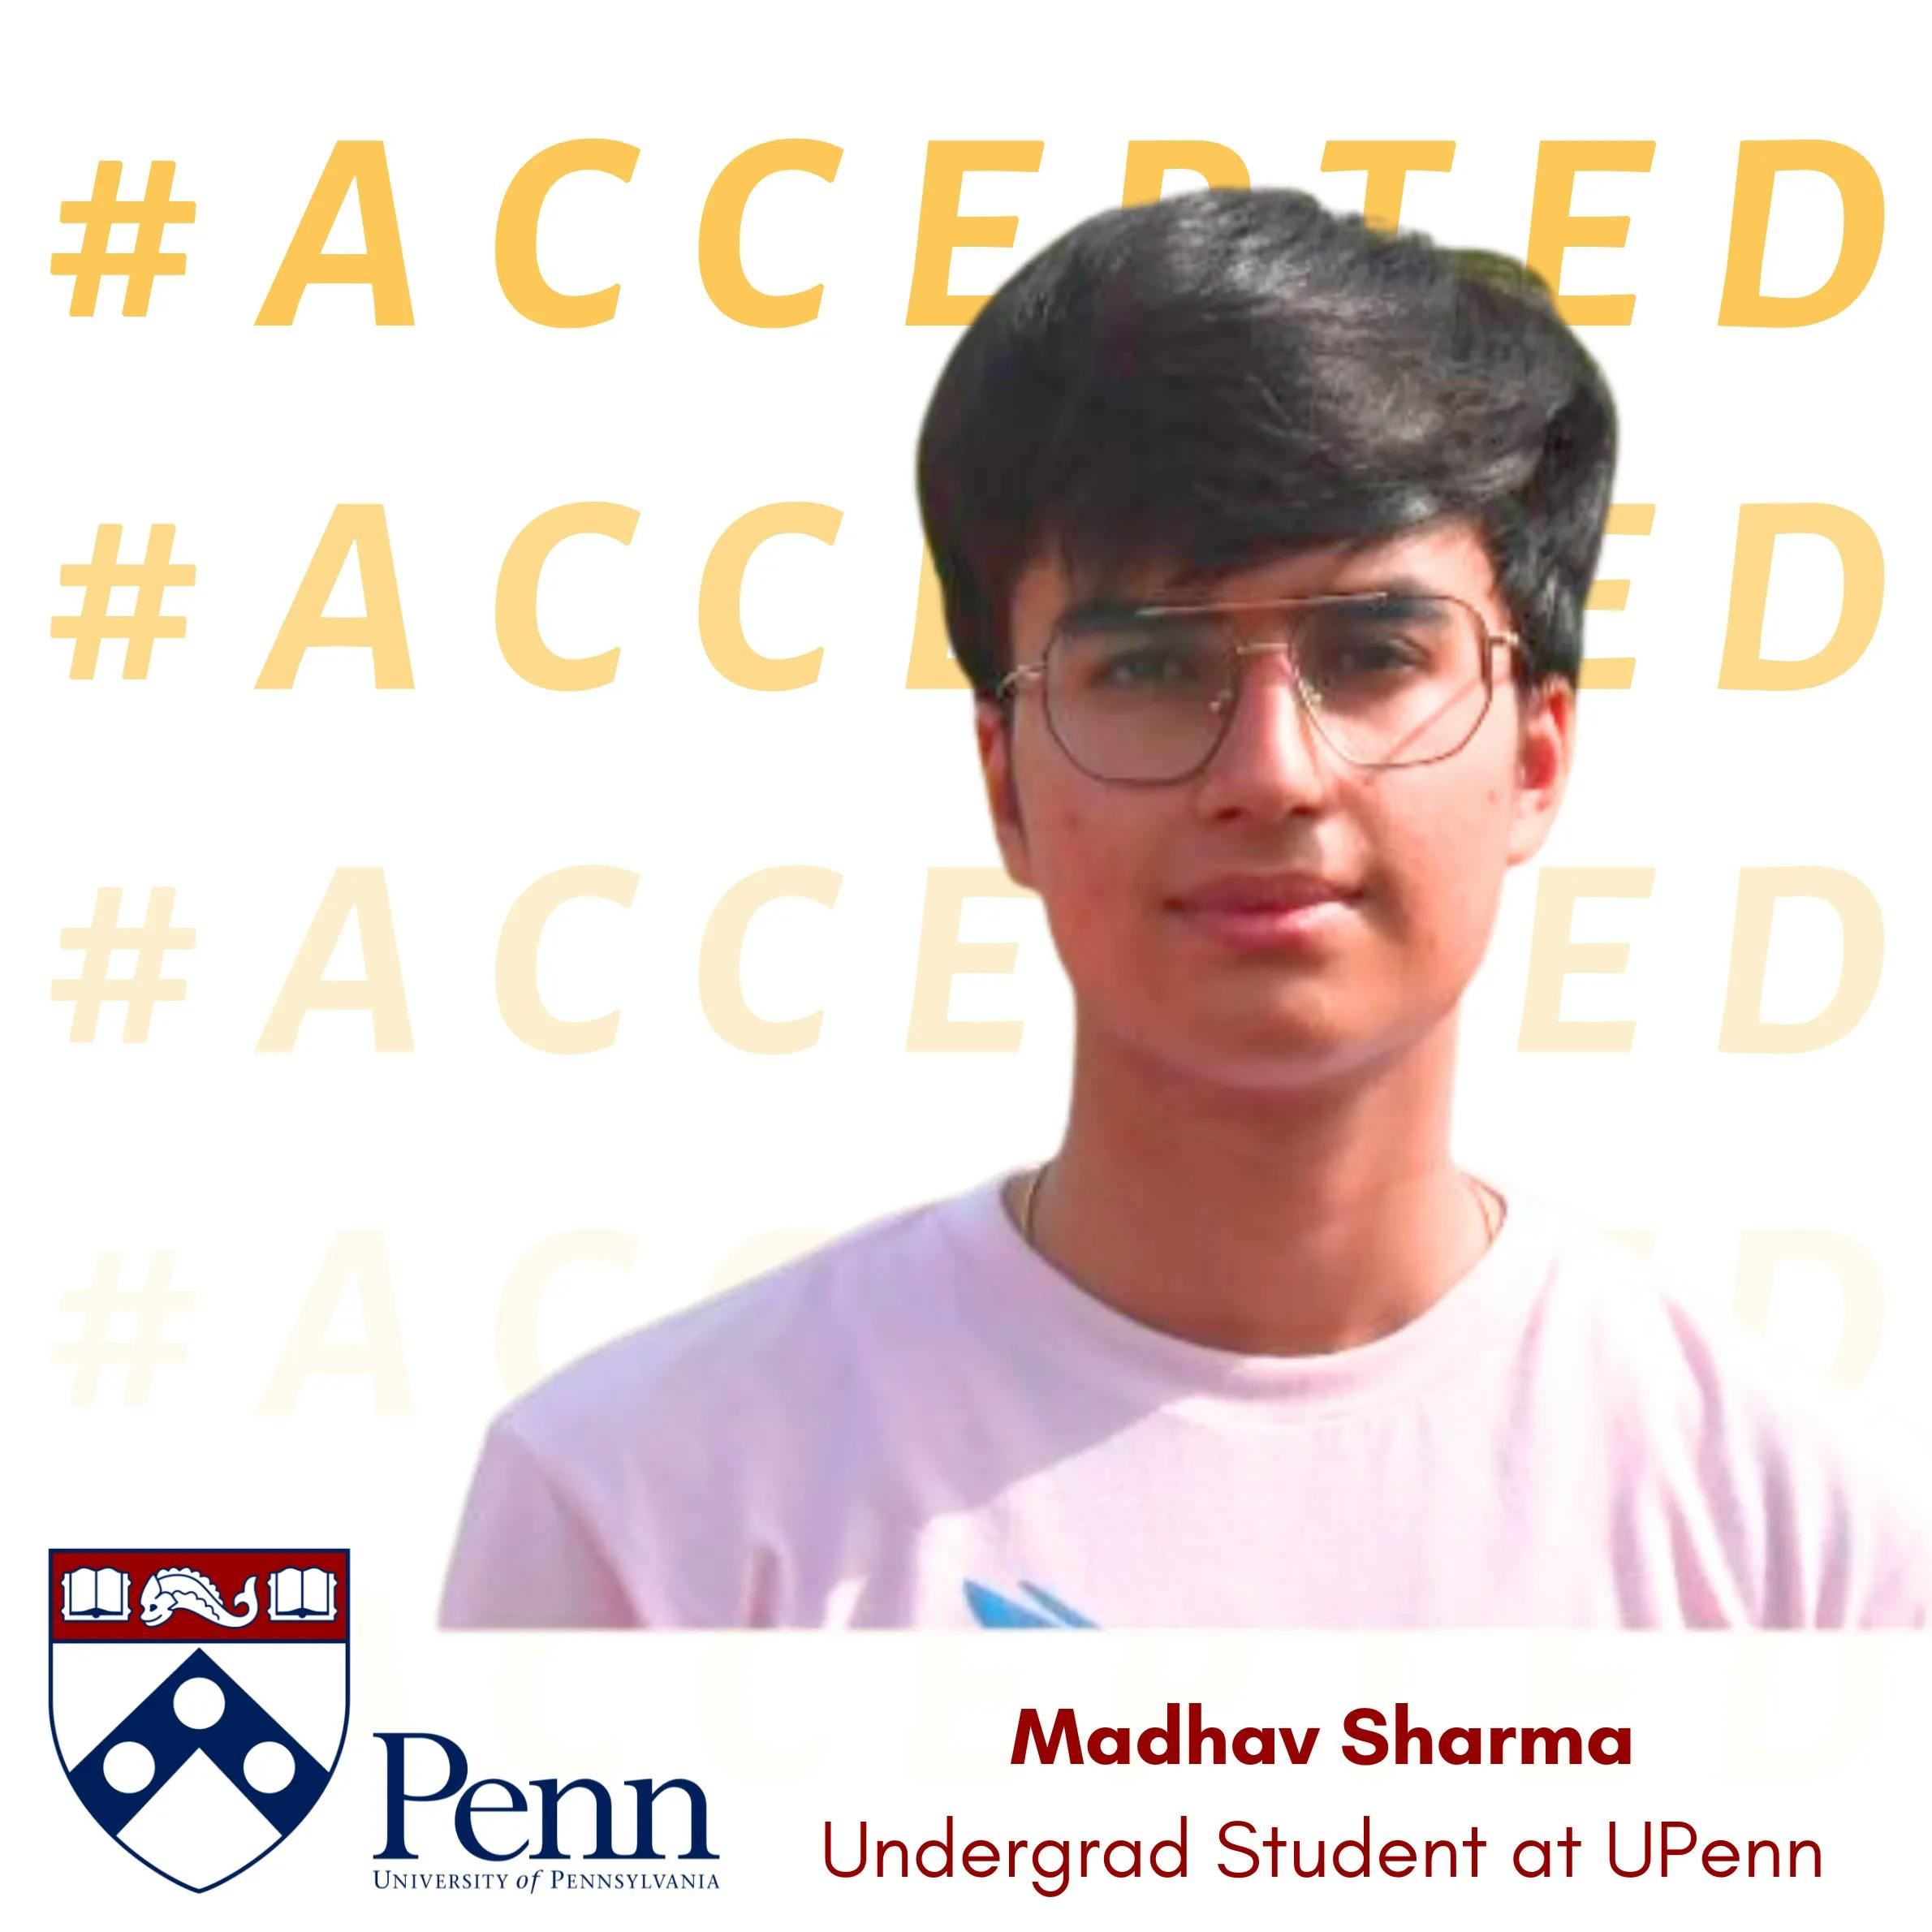 Madhav Sharma admitted to University of Pennsylvania